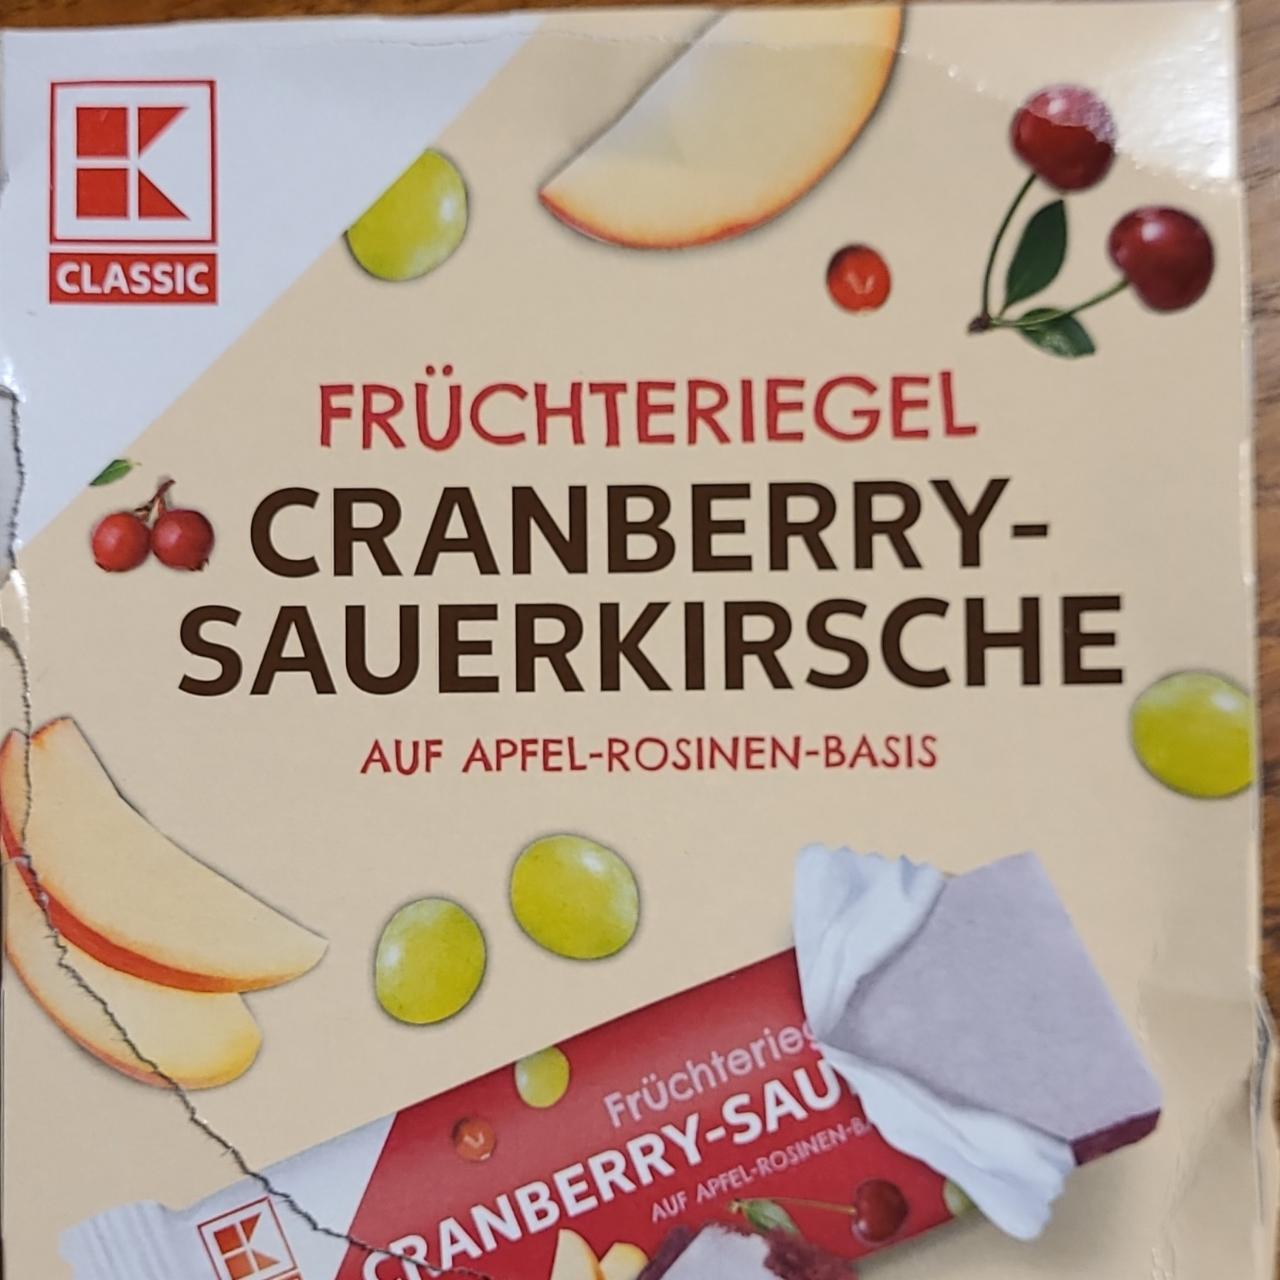 Фото - Früchteriegel Cranberry-Sauerkirsche K-Classic